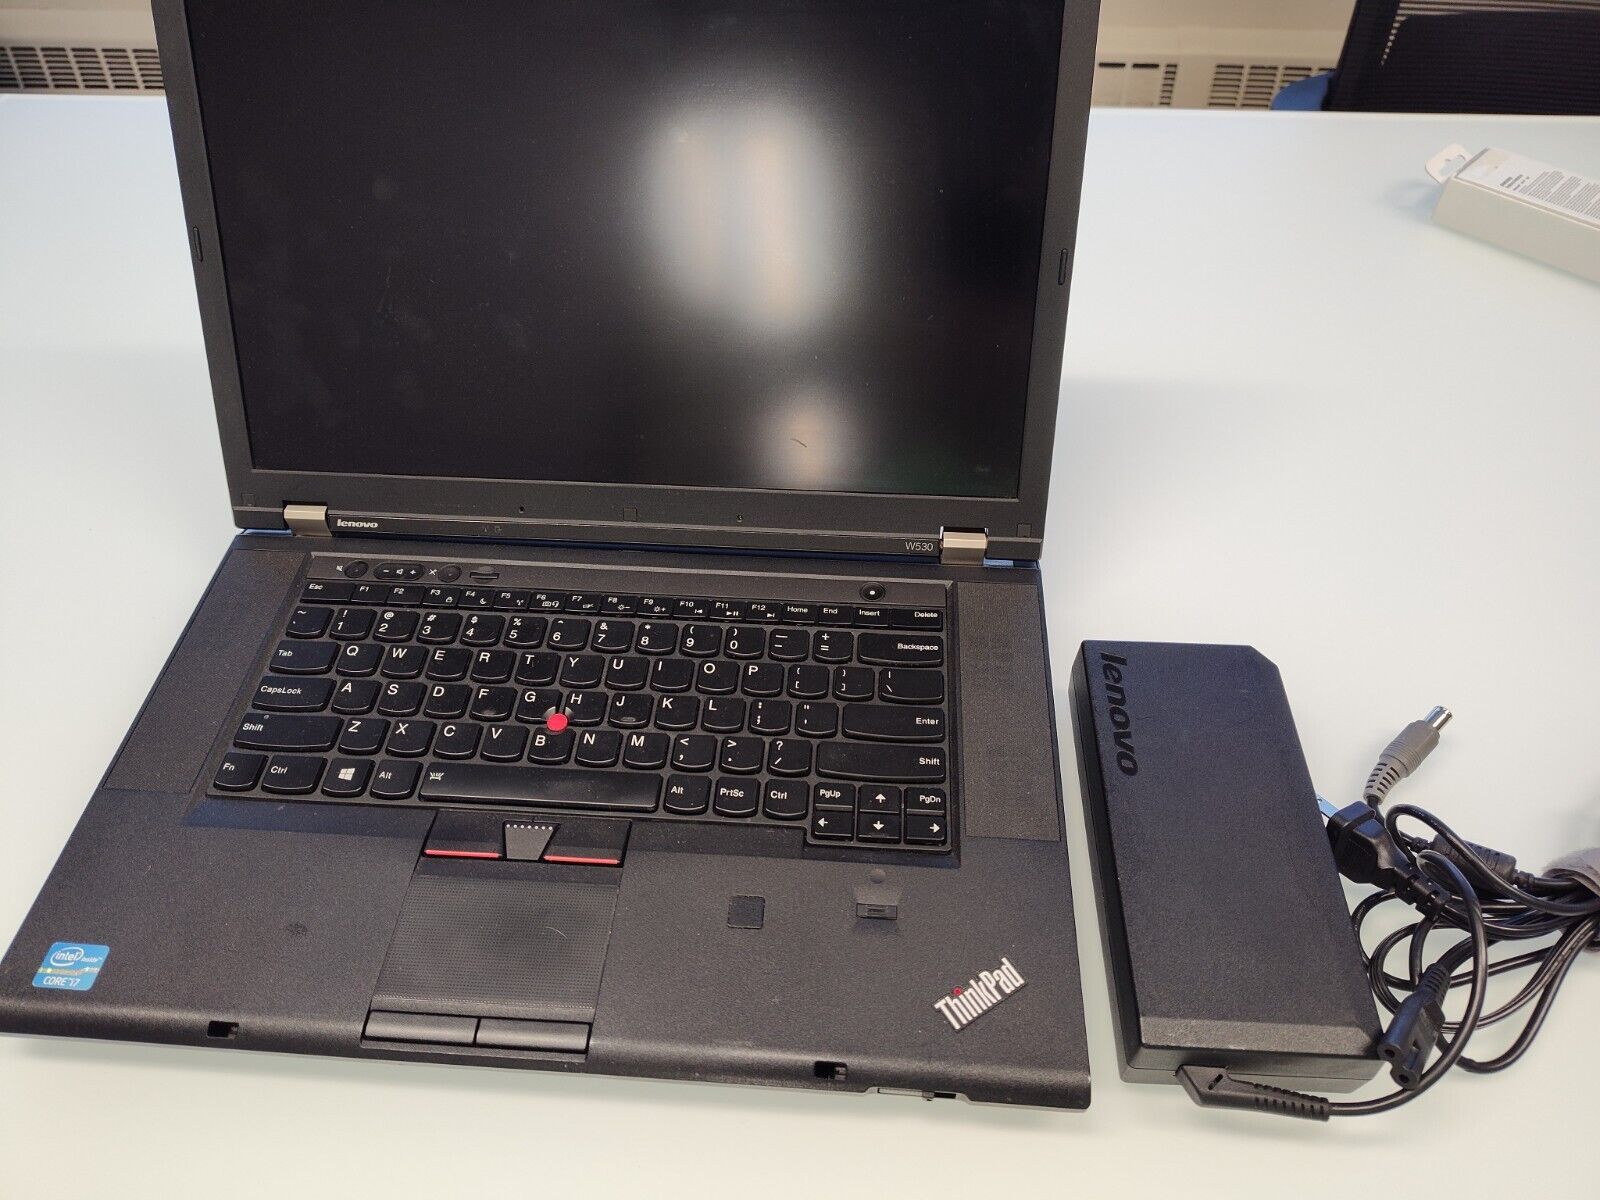 Lenovo ThinkPad W530 i7-3630QM 2.4GHz 16GB RAM 256GB SSD Windows 10 Pro